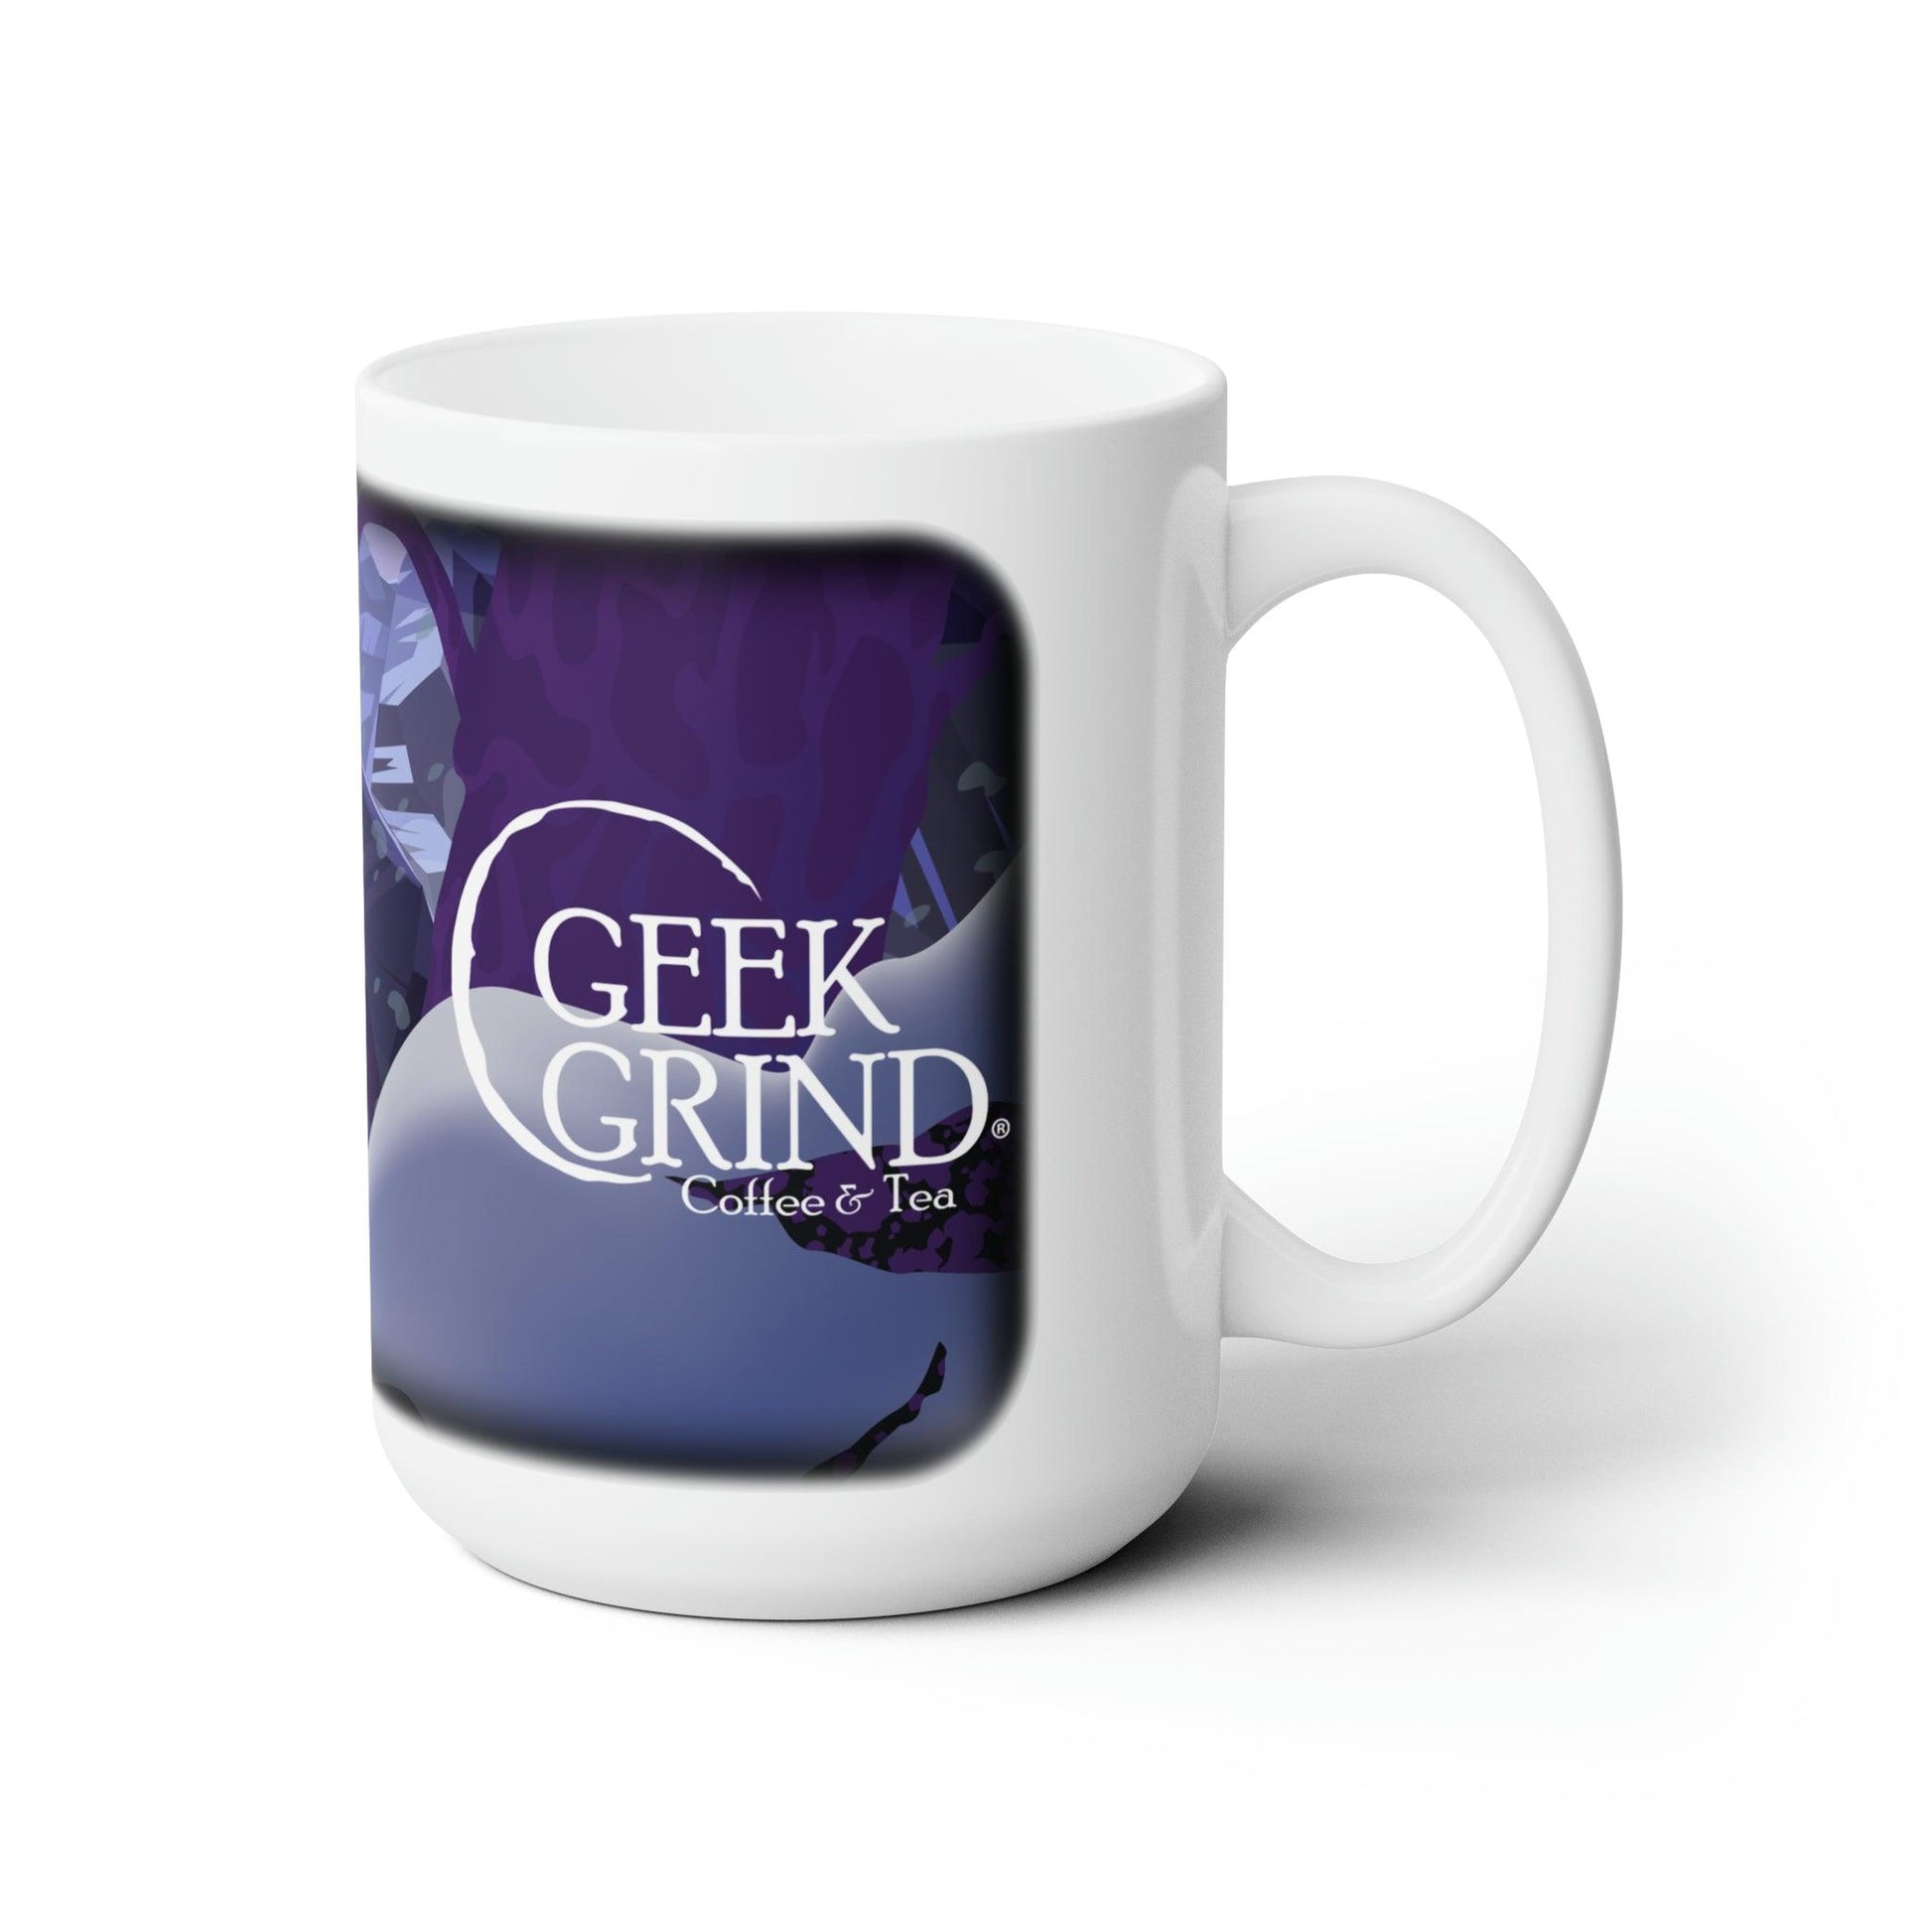 Tracks of the Yeti Mug - Geek Grind Coffee